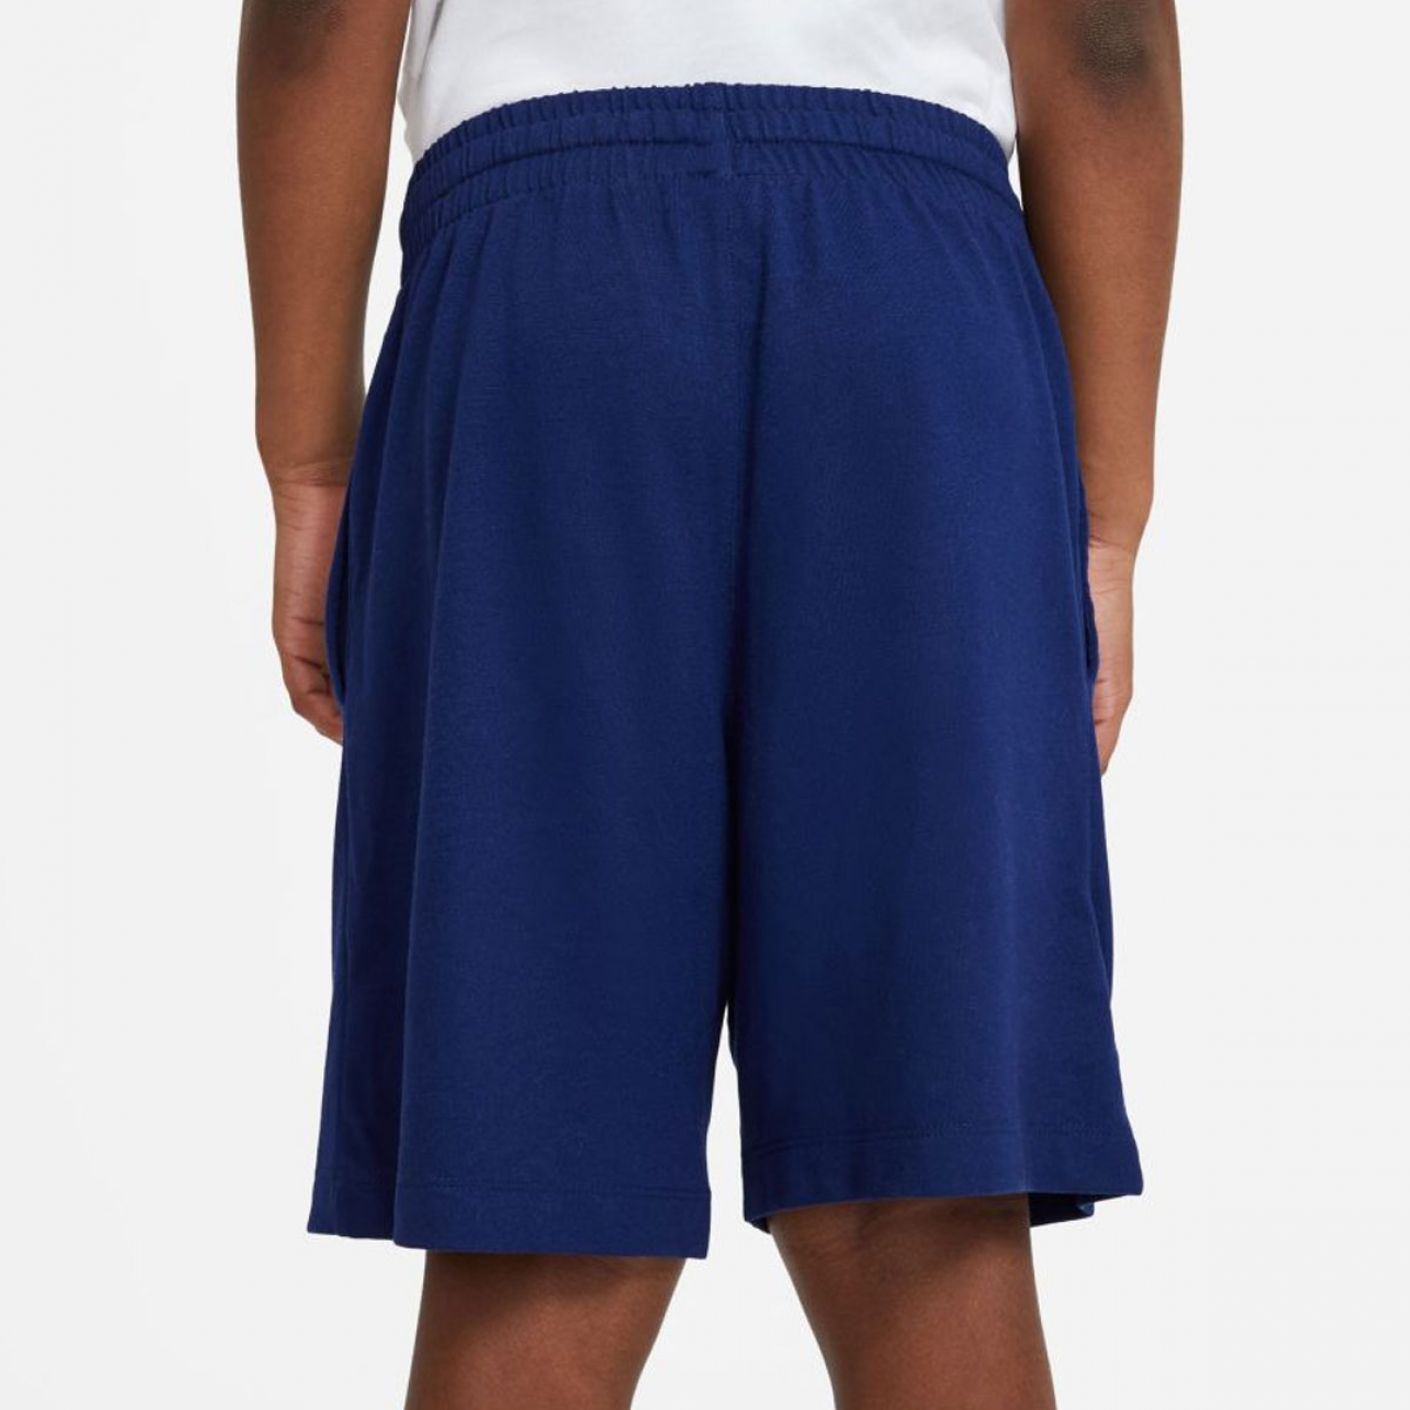 Nike Bermuda Sportswear Blue-White for Kids